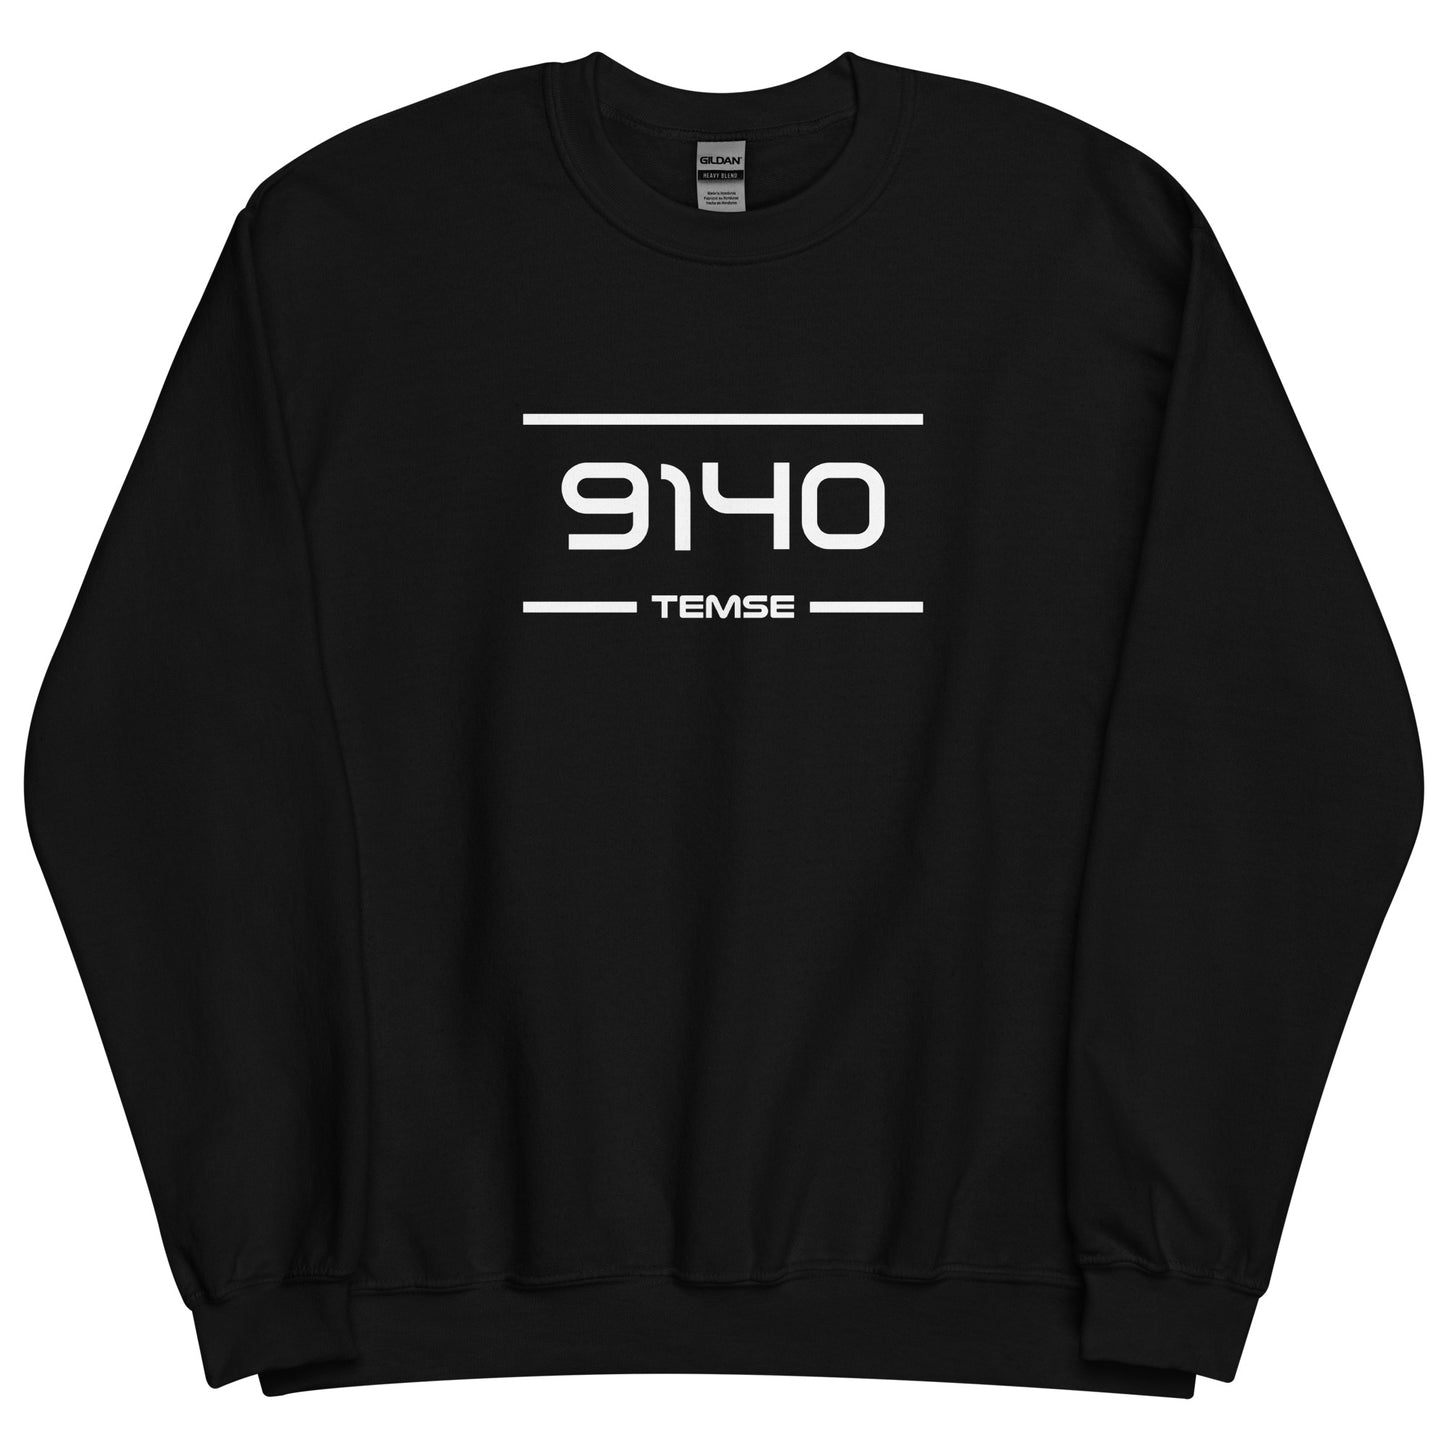 Sweater - 9140 - Temse (M/V)